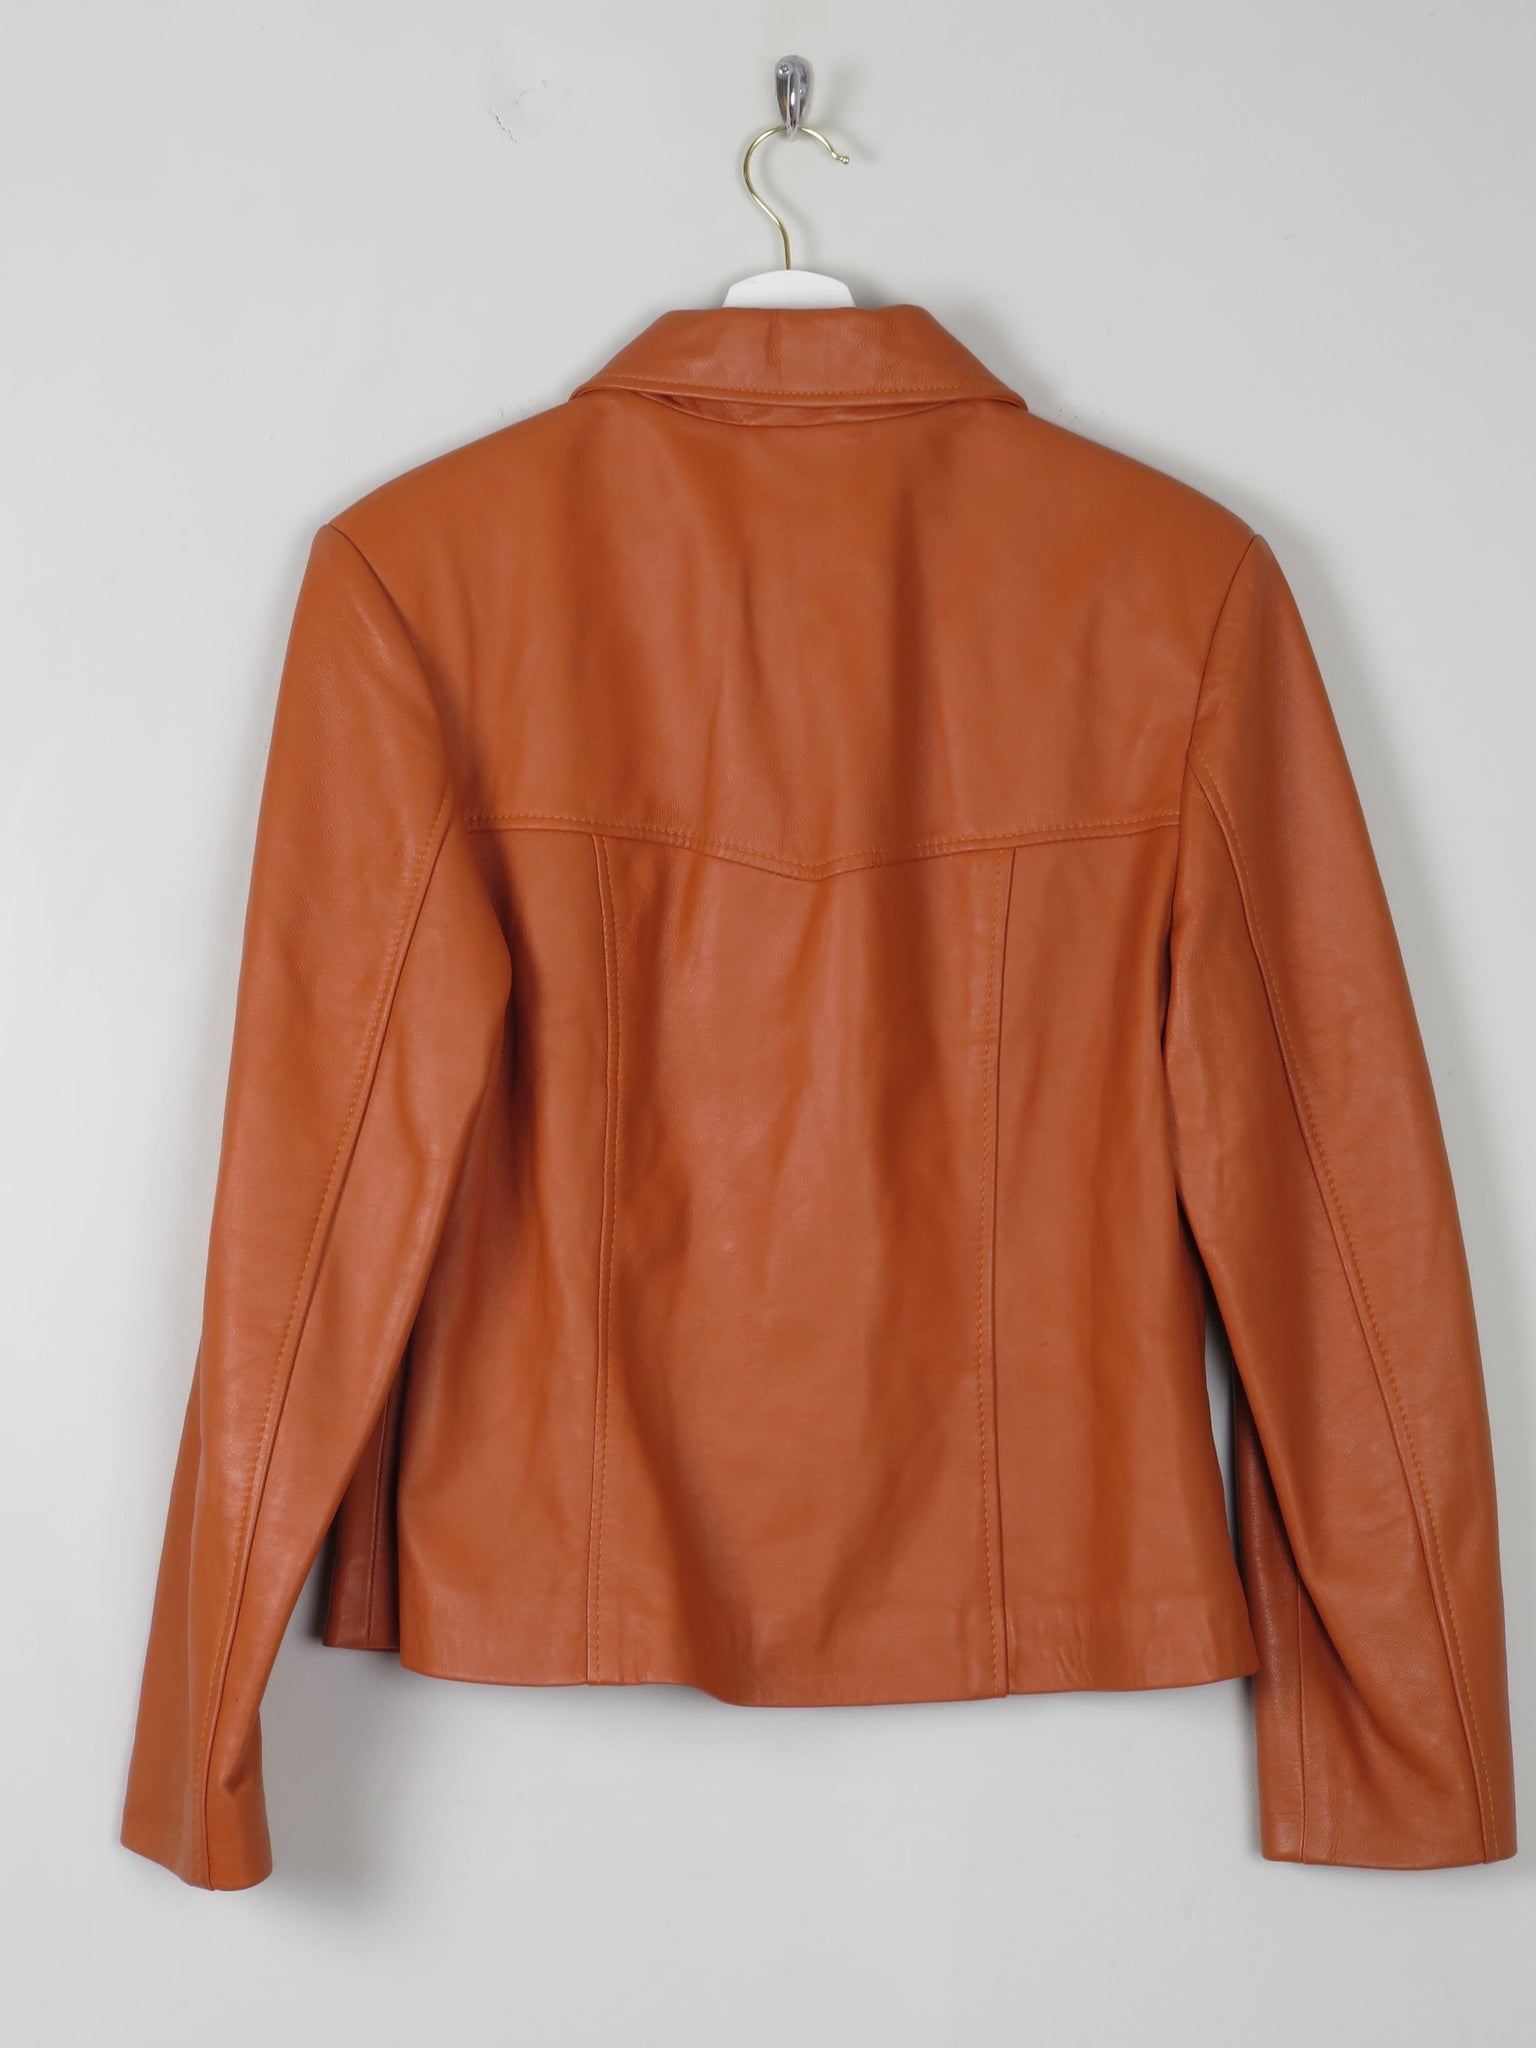 Women's Orange/Tan Leather Vintage Jacket M - The Harlequin